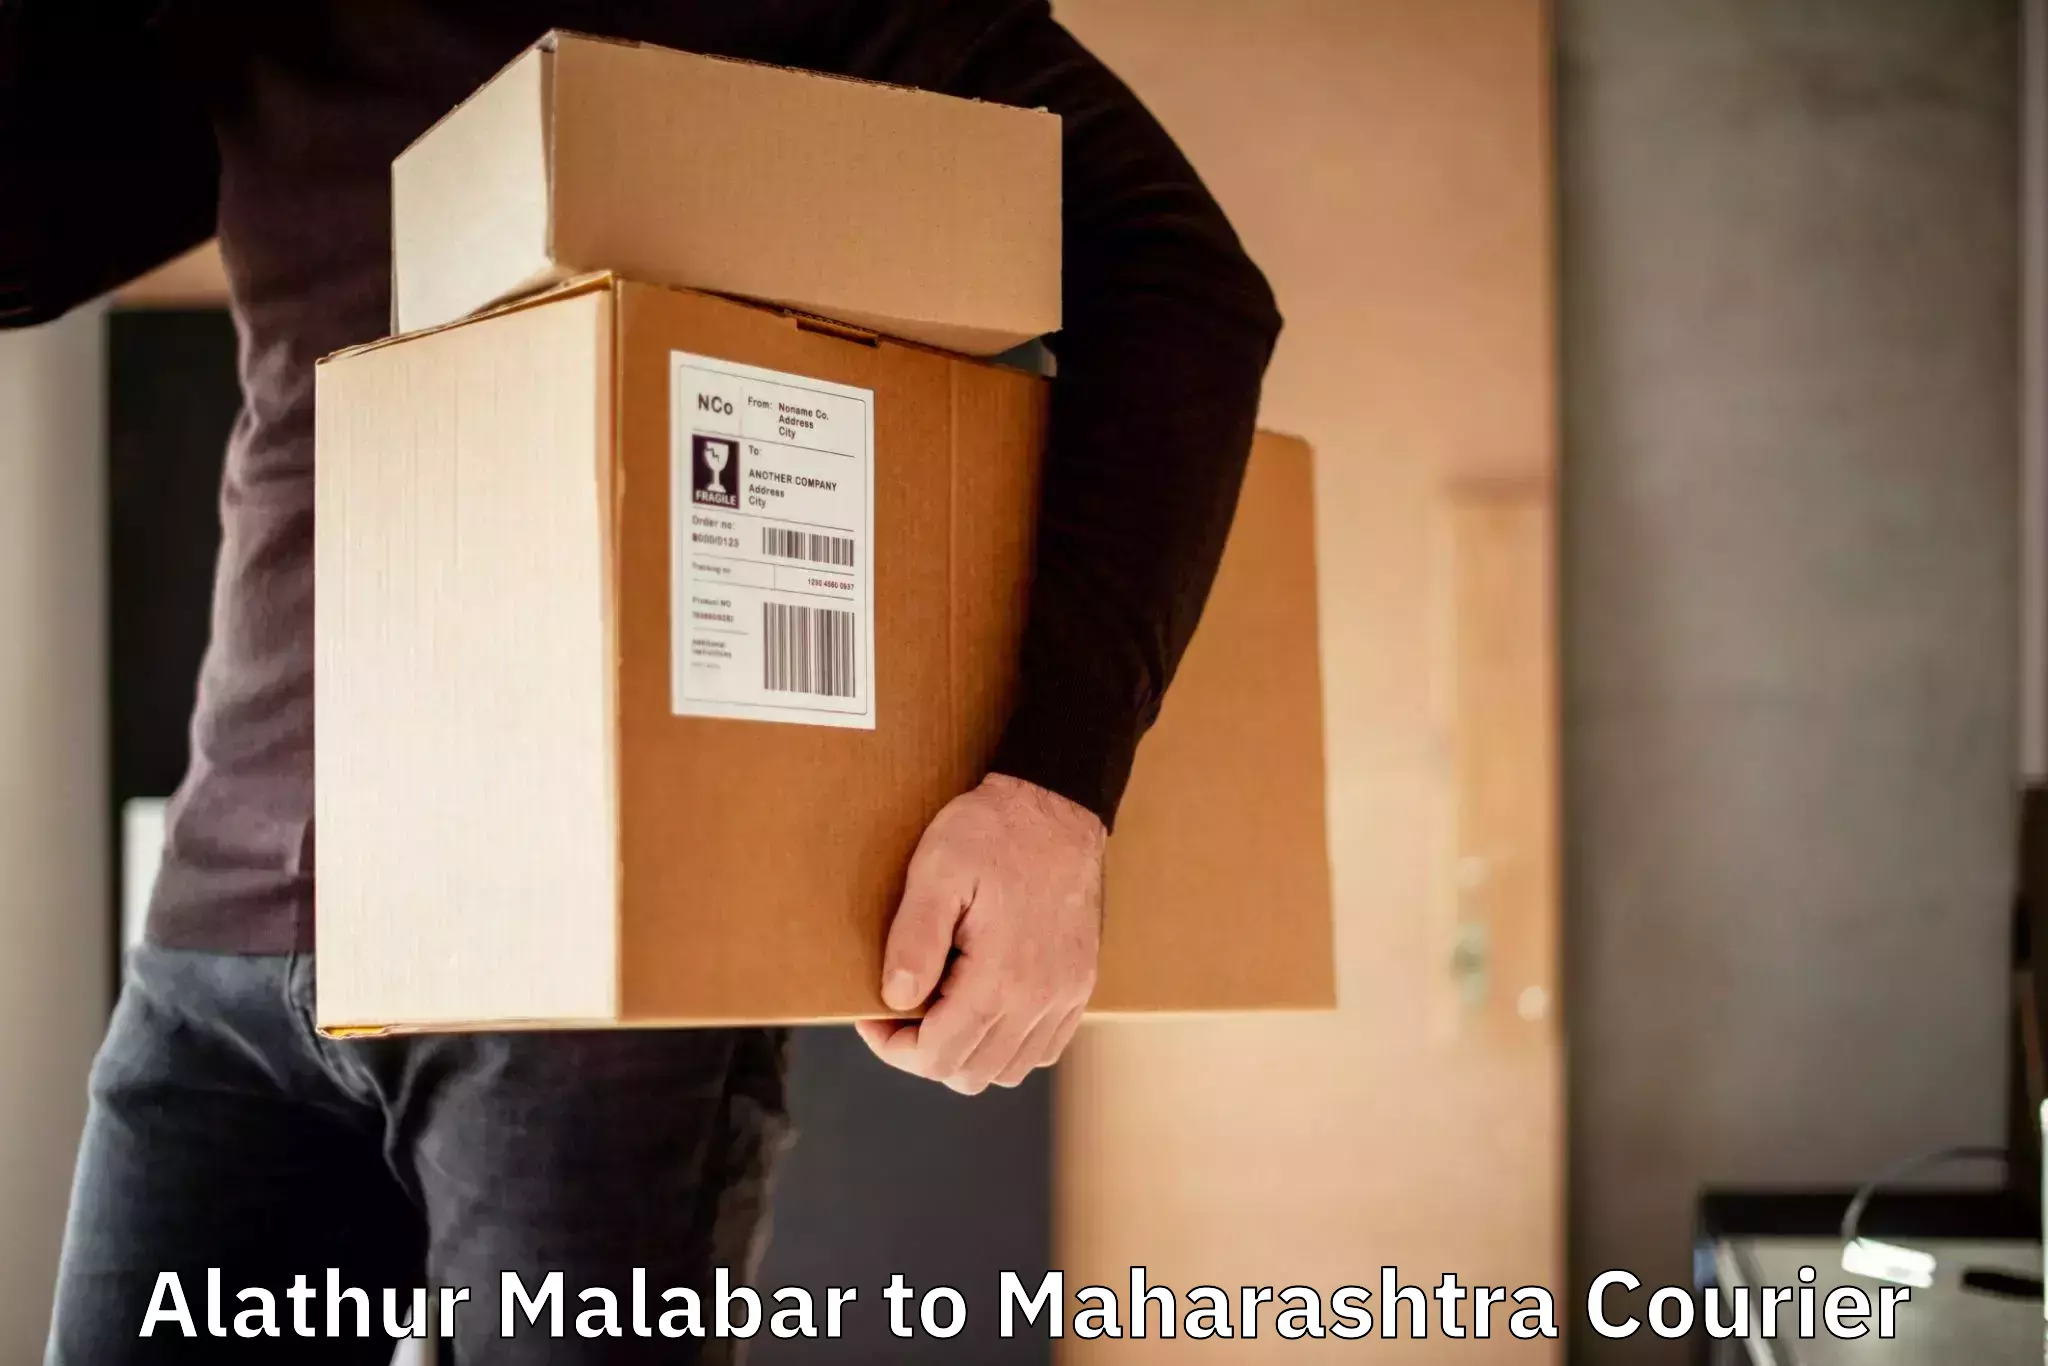 Express delivery network Alathur Malabar to Vasmat